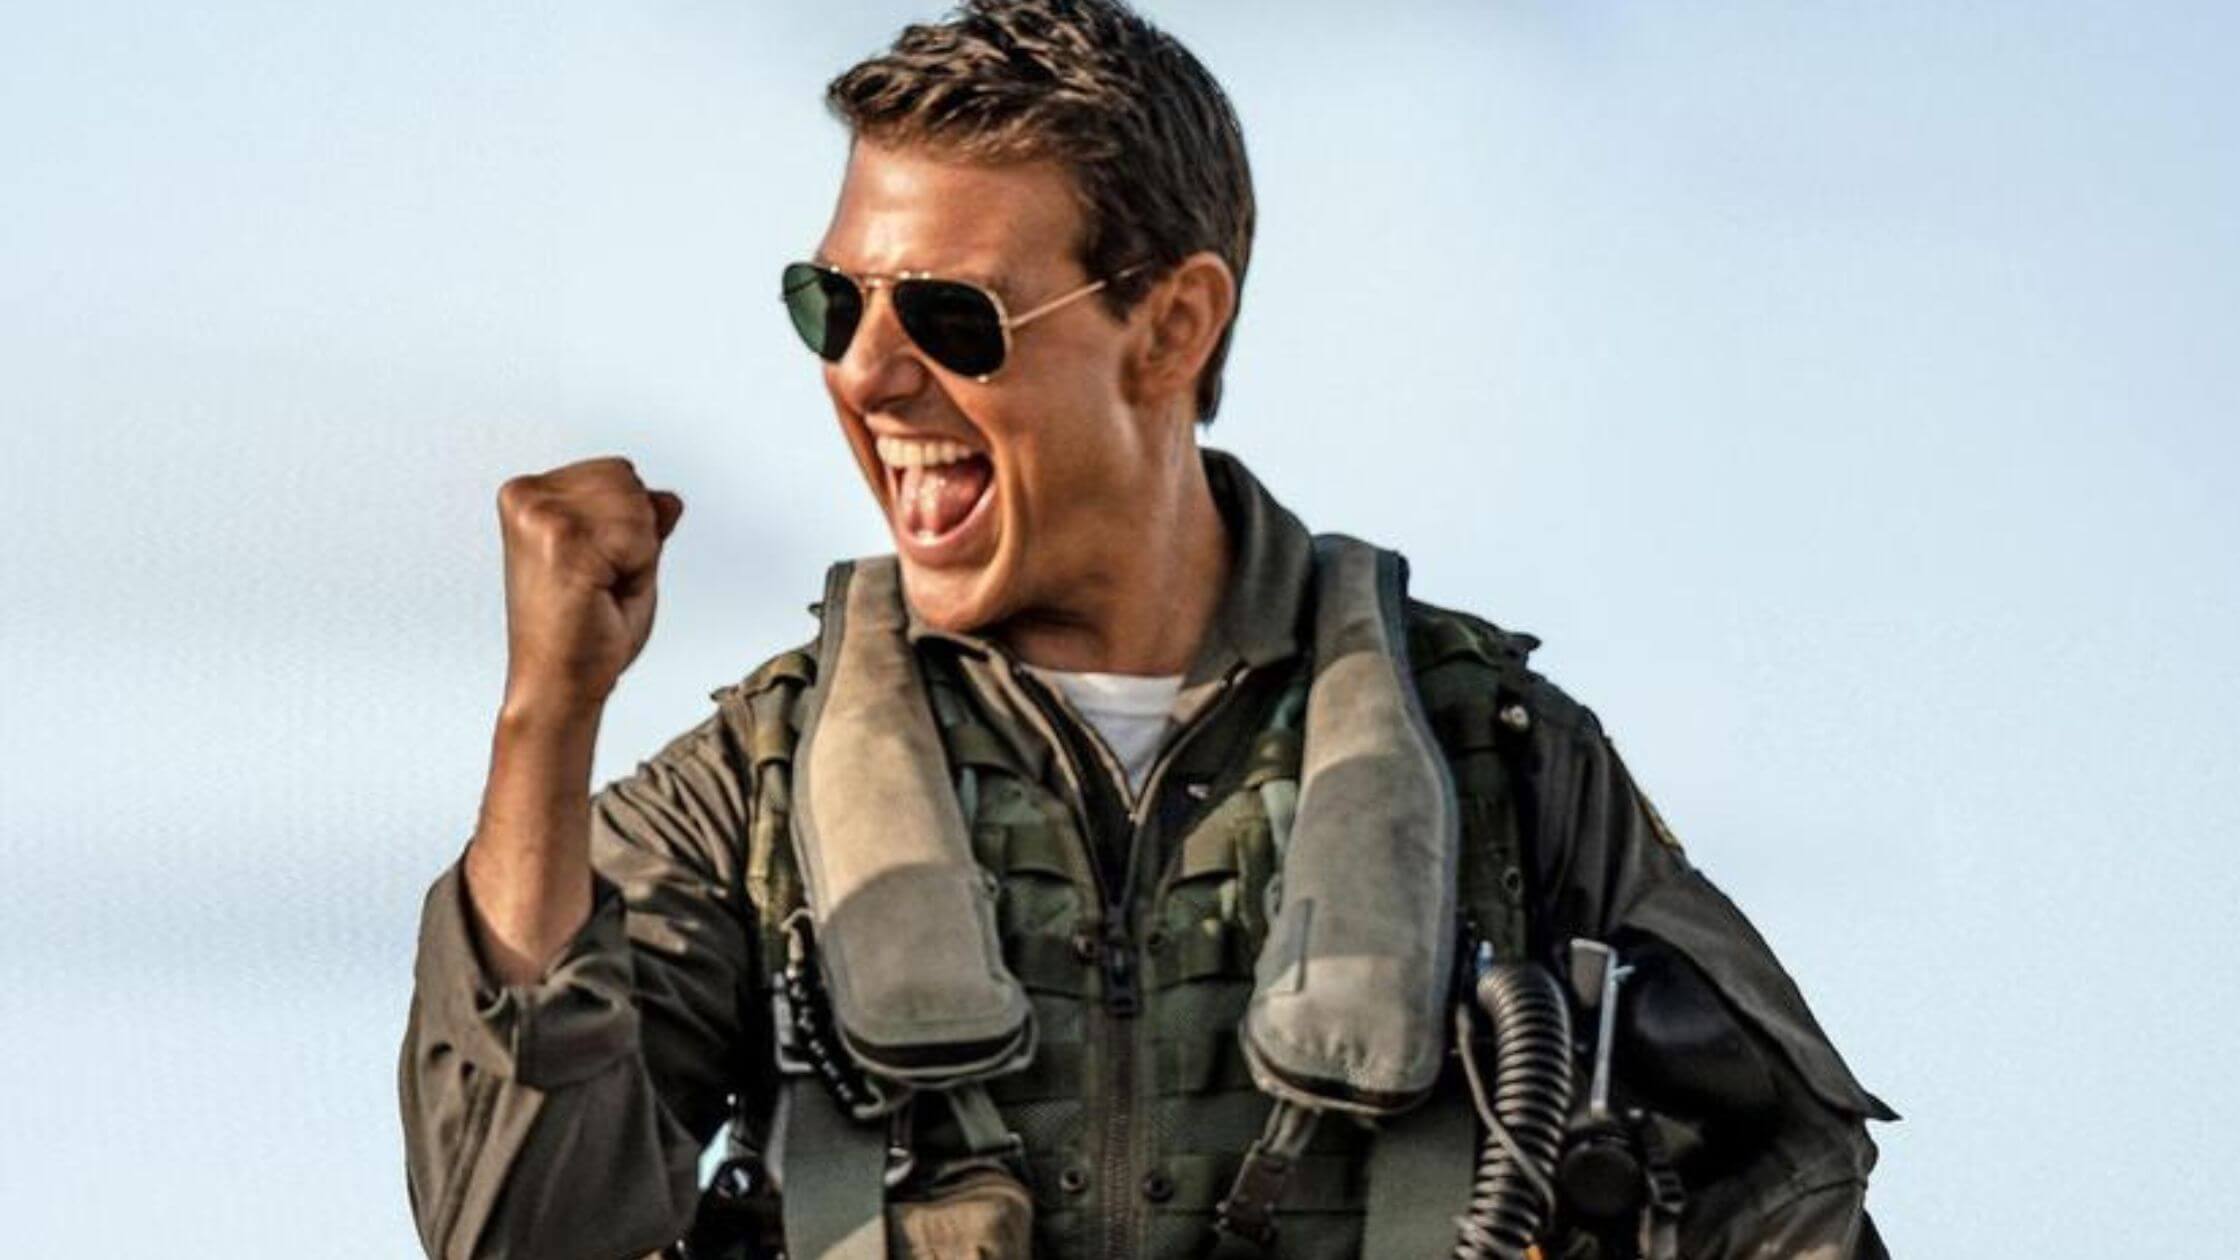 Tom Cruise's Top Gun Maverick Is Getting Close To $550 Million Worldwide